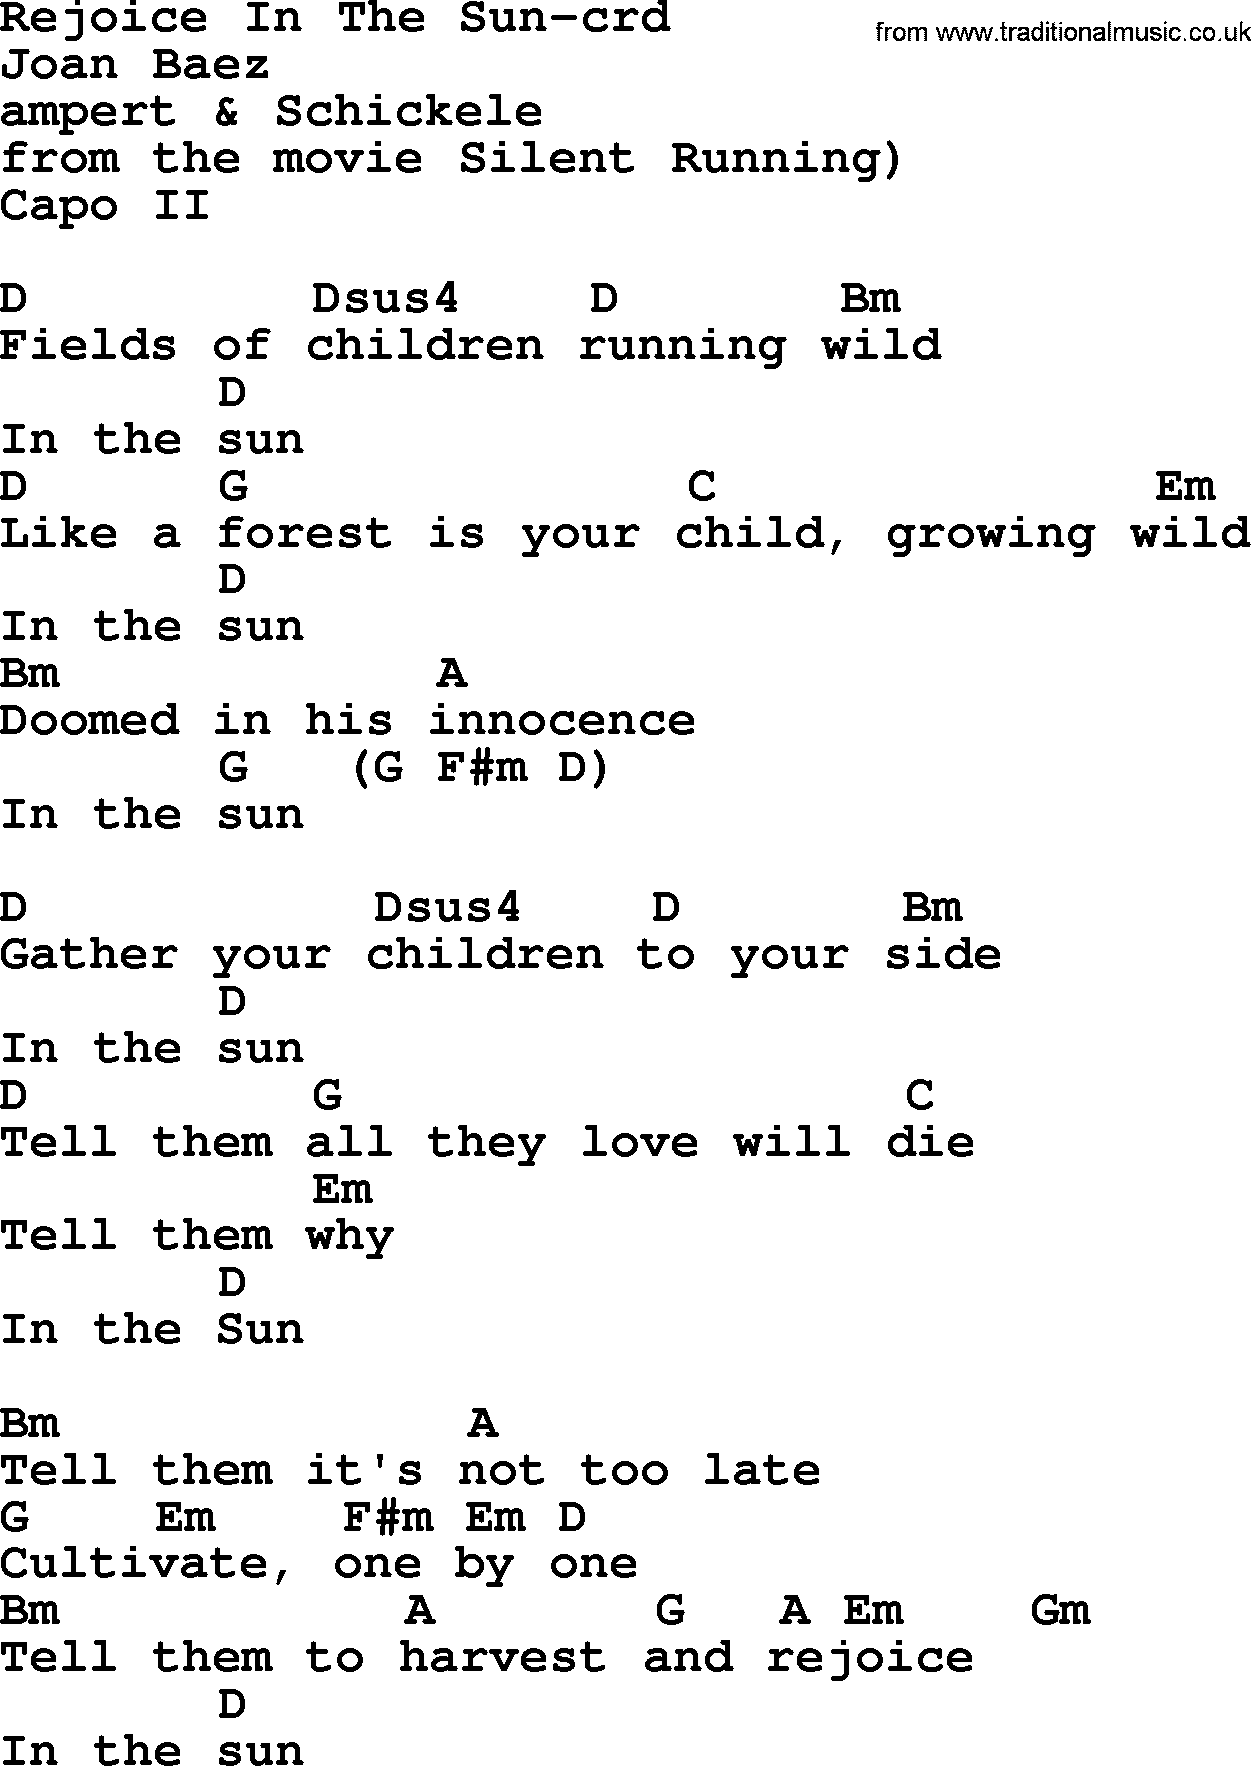 Joan Baez song Rejoice In The Sun lyrics and chords